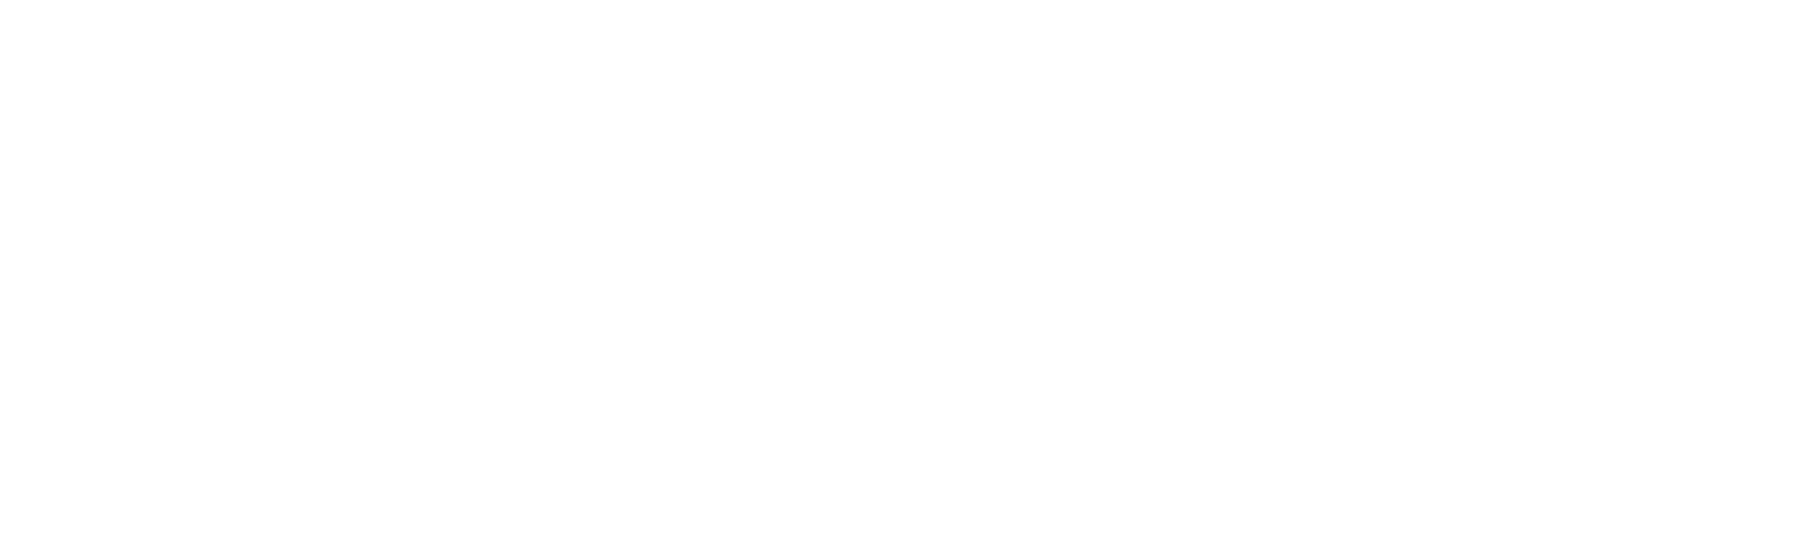 Congresswoman Mikie Sherrill logo